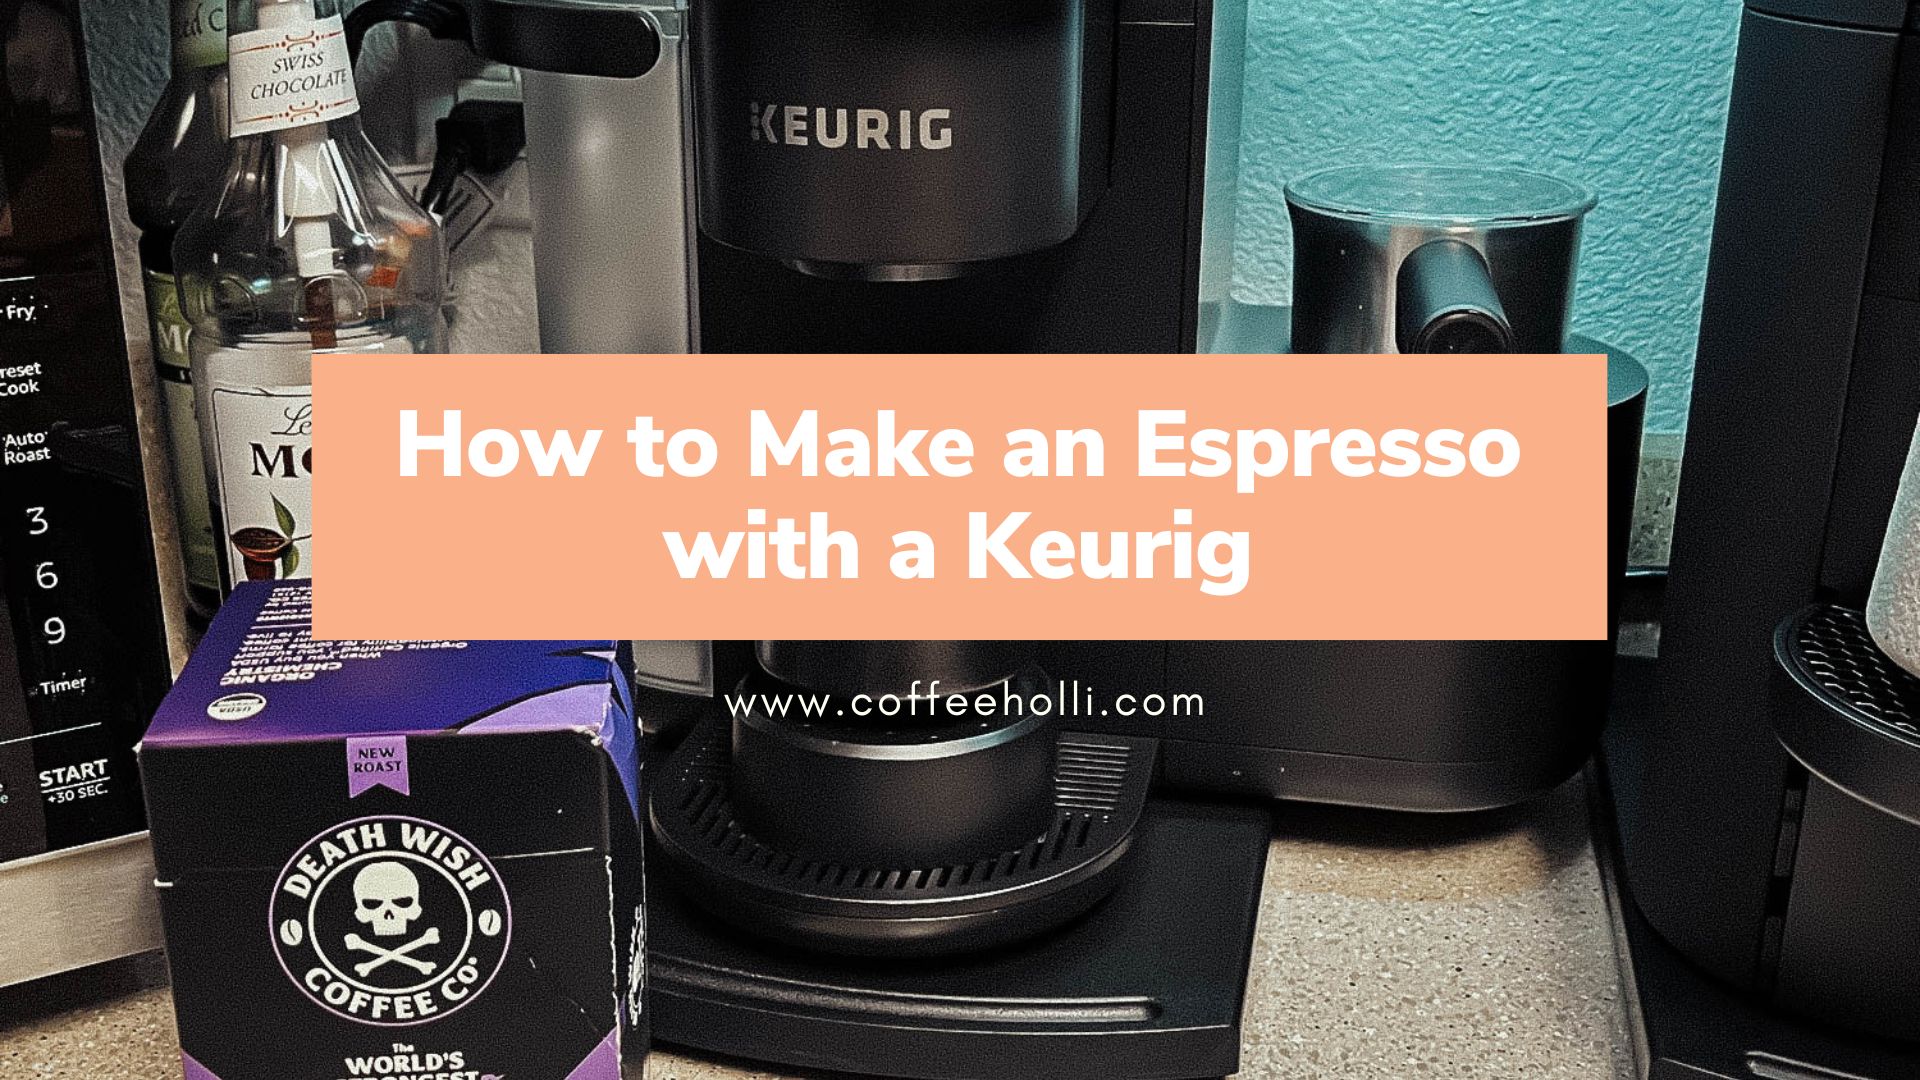 How to Make an Espresso with a Keurig